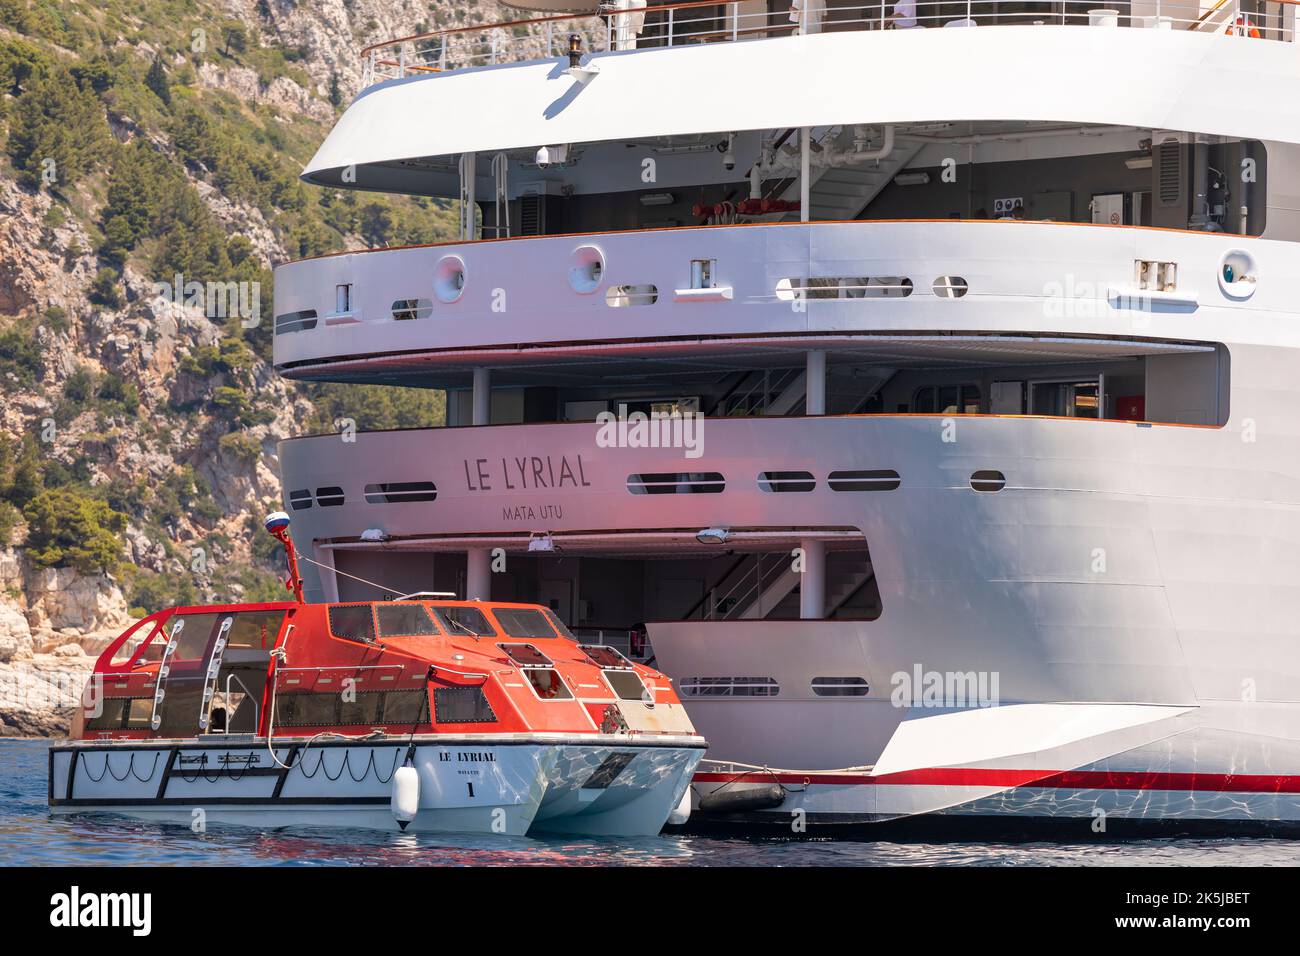 DUBROVNIK, CROATIA, EUROPE - Cruise ship Le Lyrial achored near Dubrovnik. Stock Photo